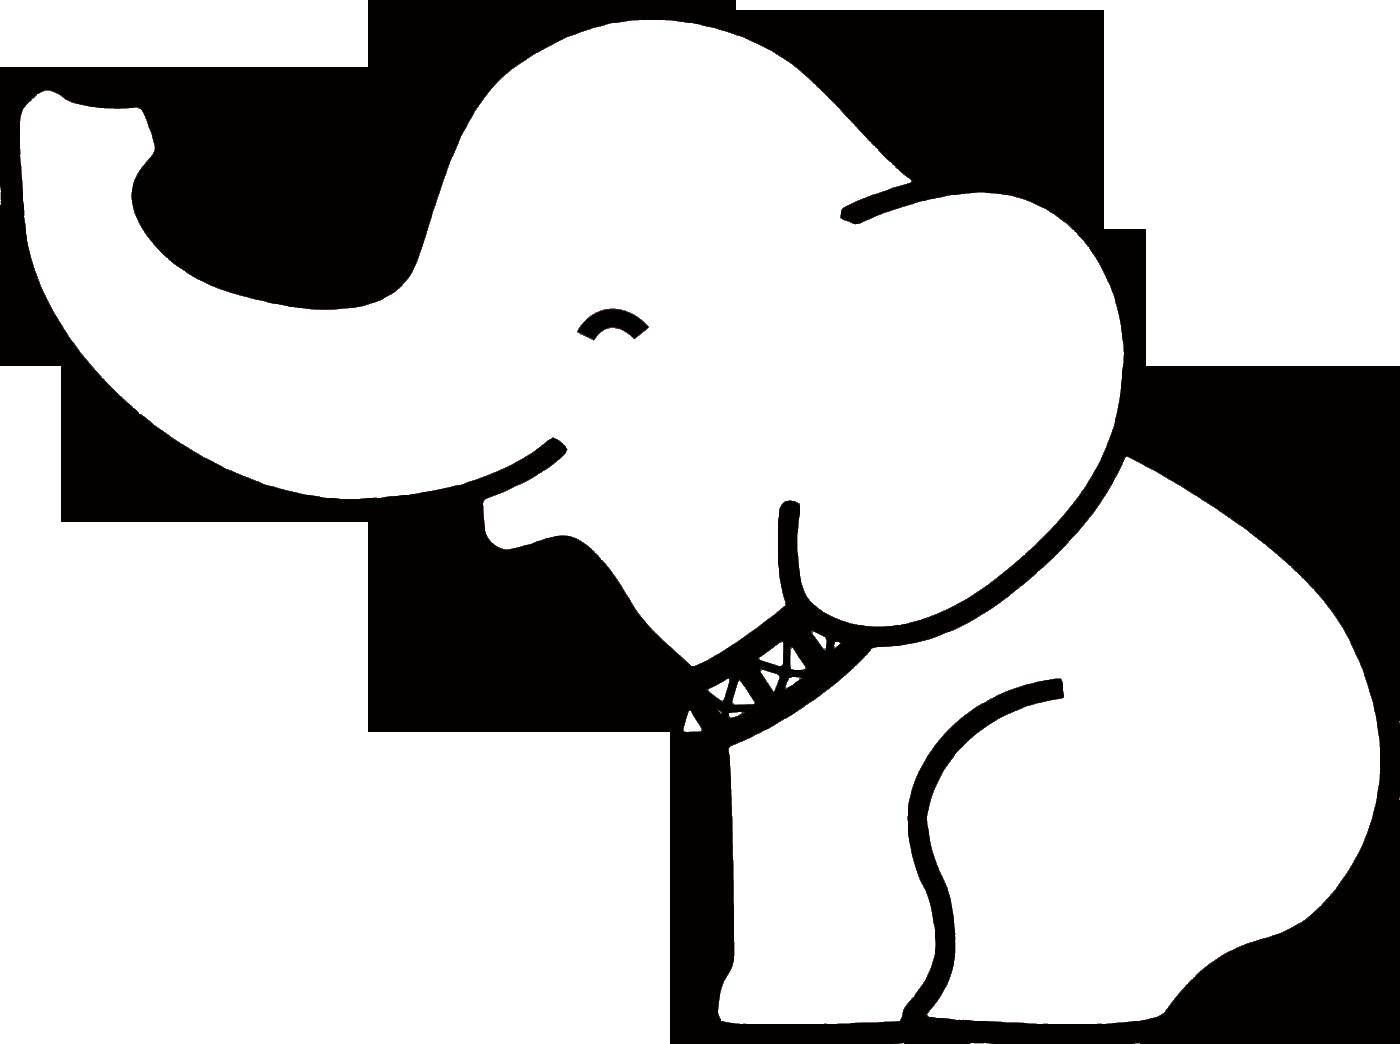 Coloring Elephant. Category Animals. Tags:  animals, elephant.